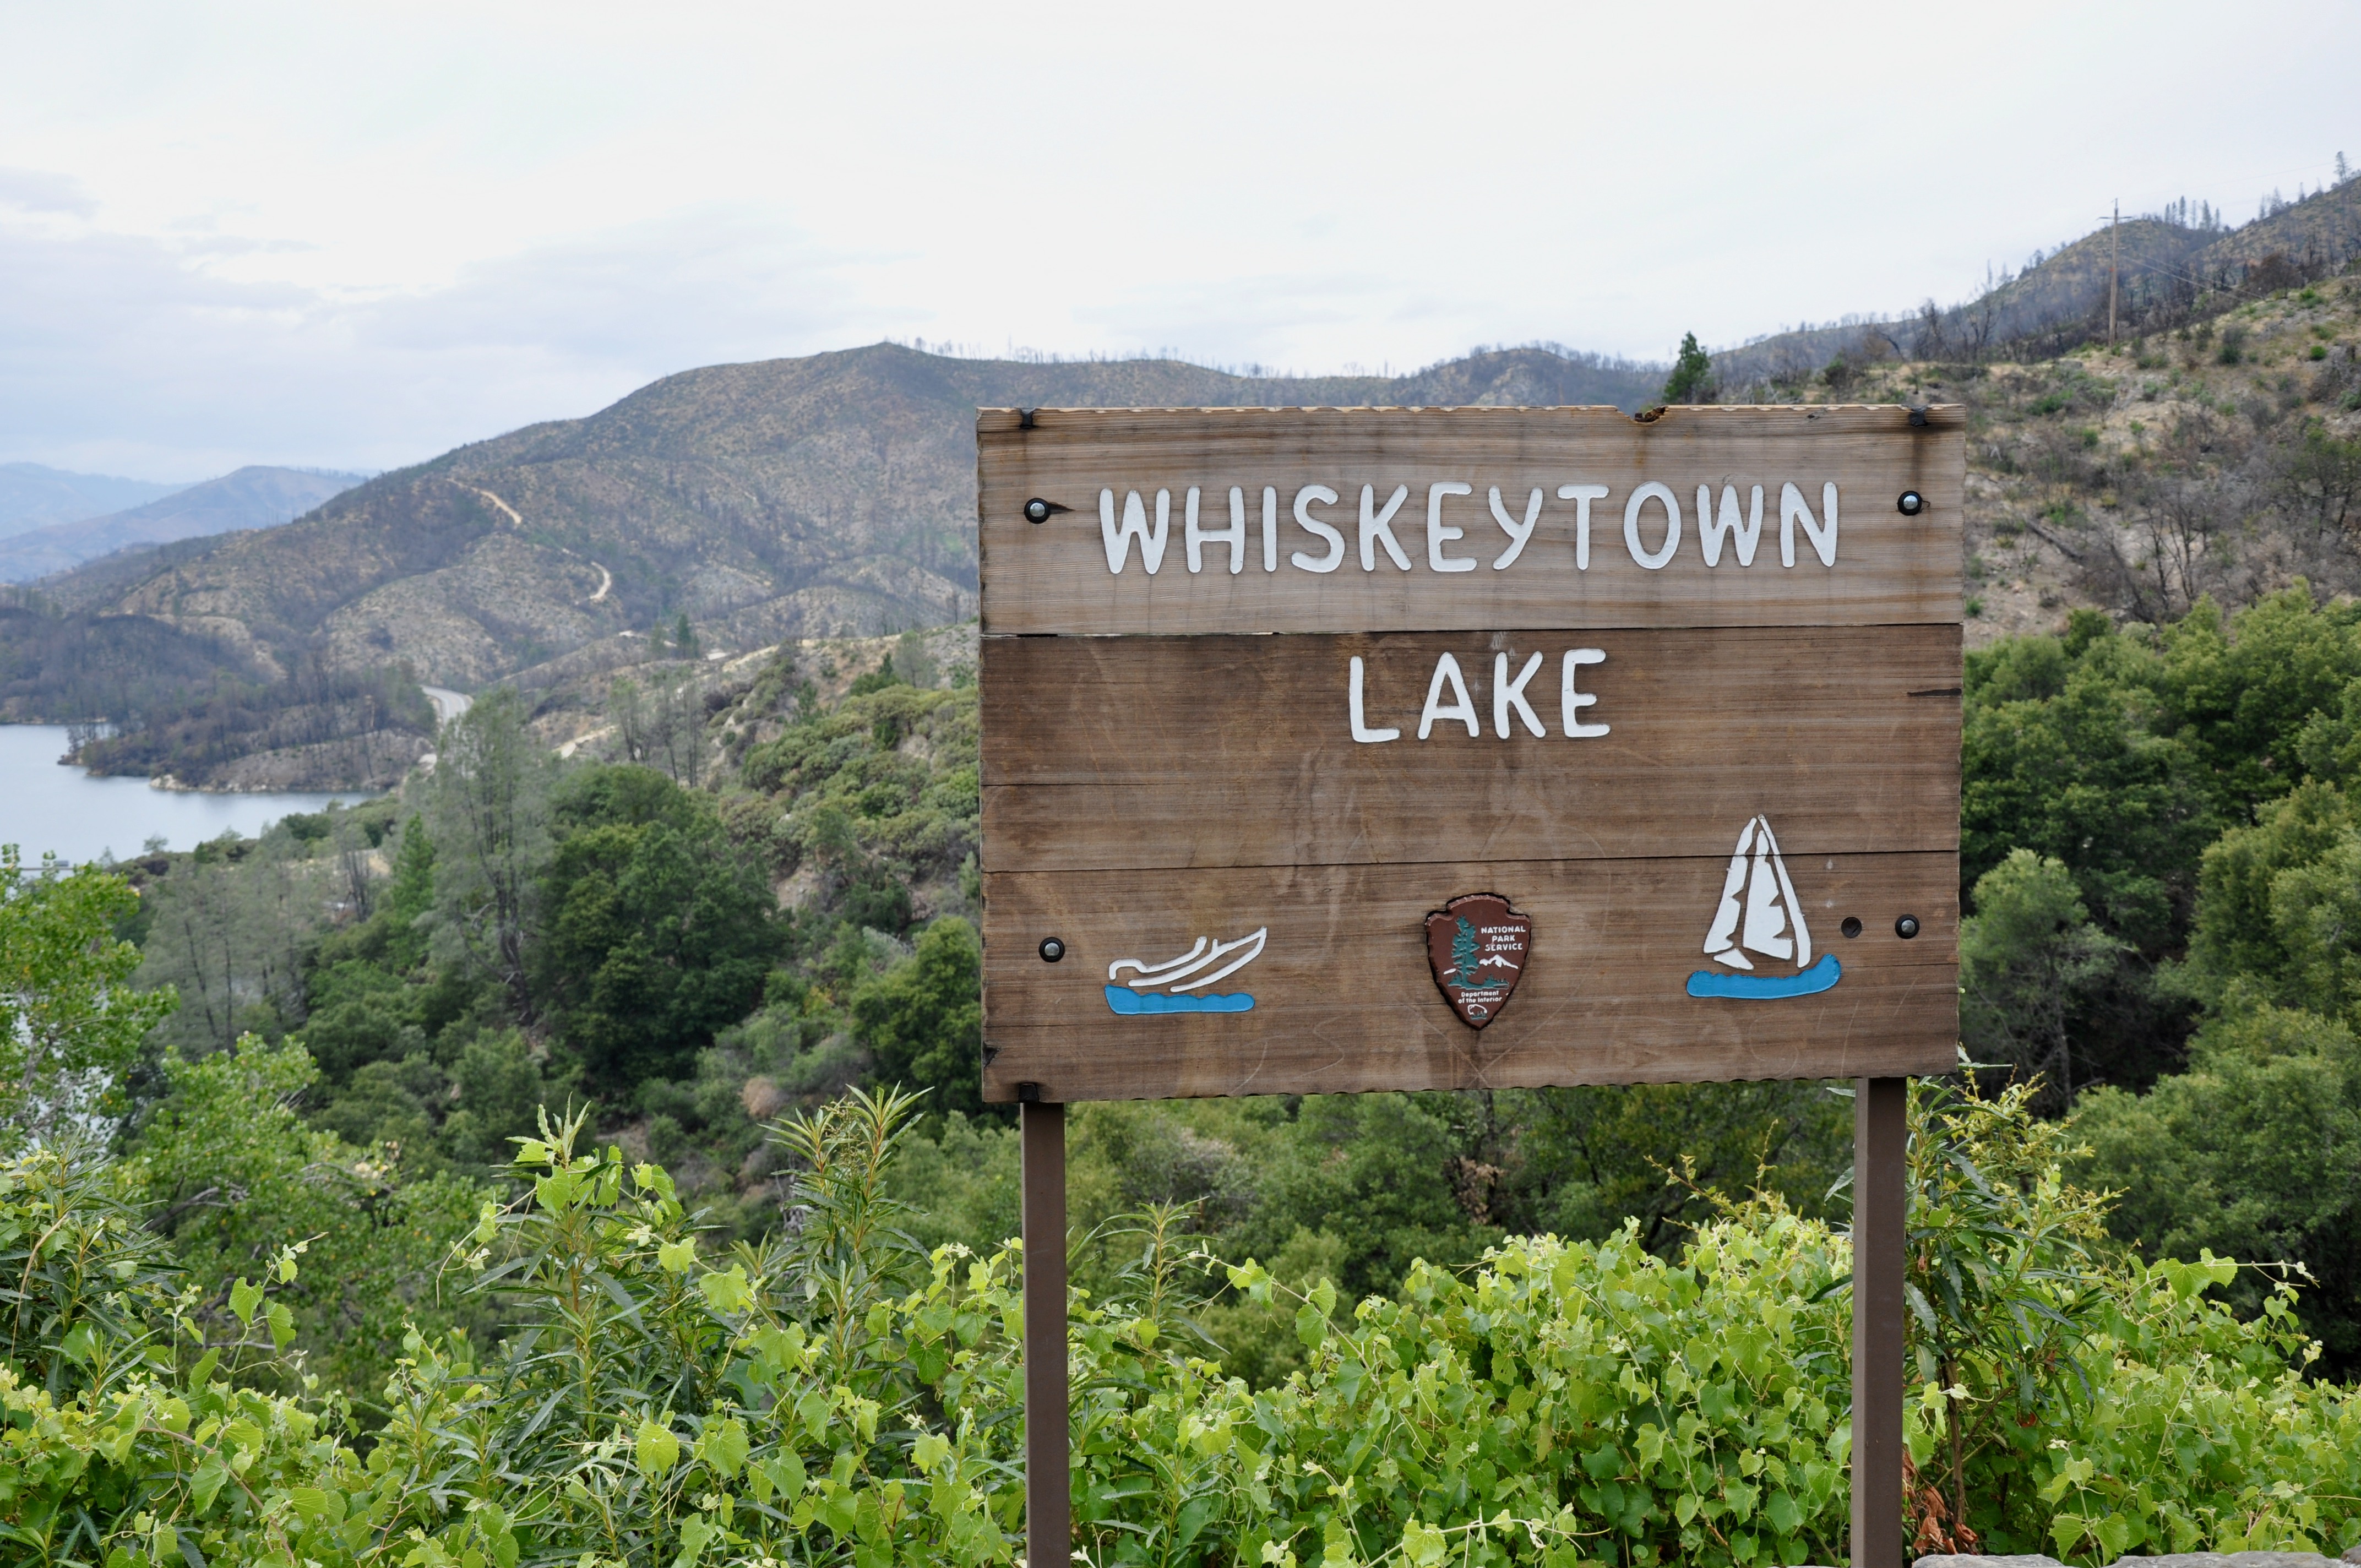 Whiskeytown Lake in northern California